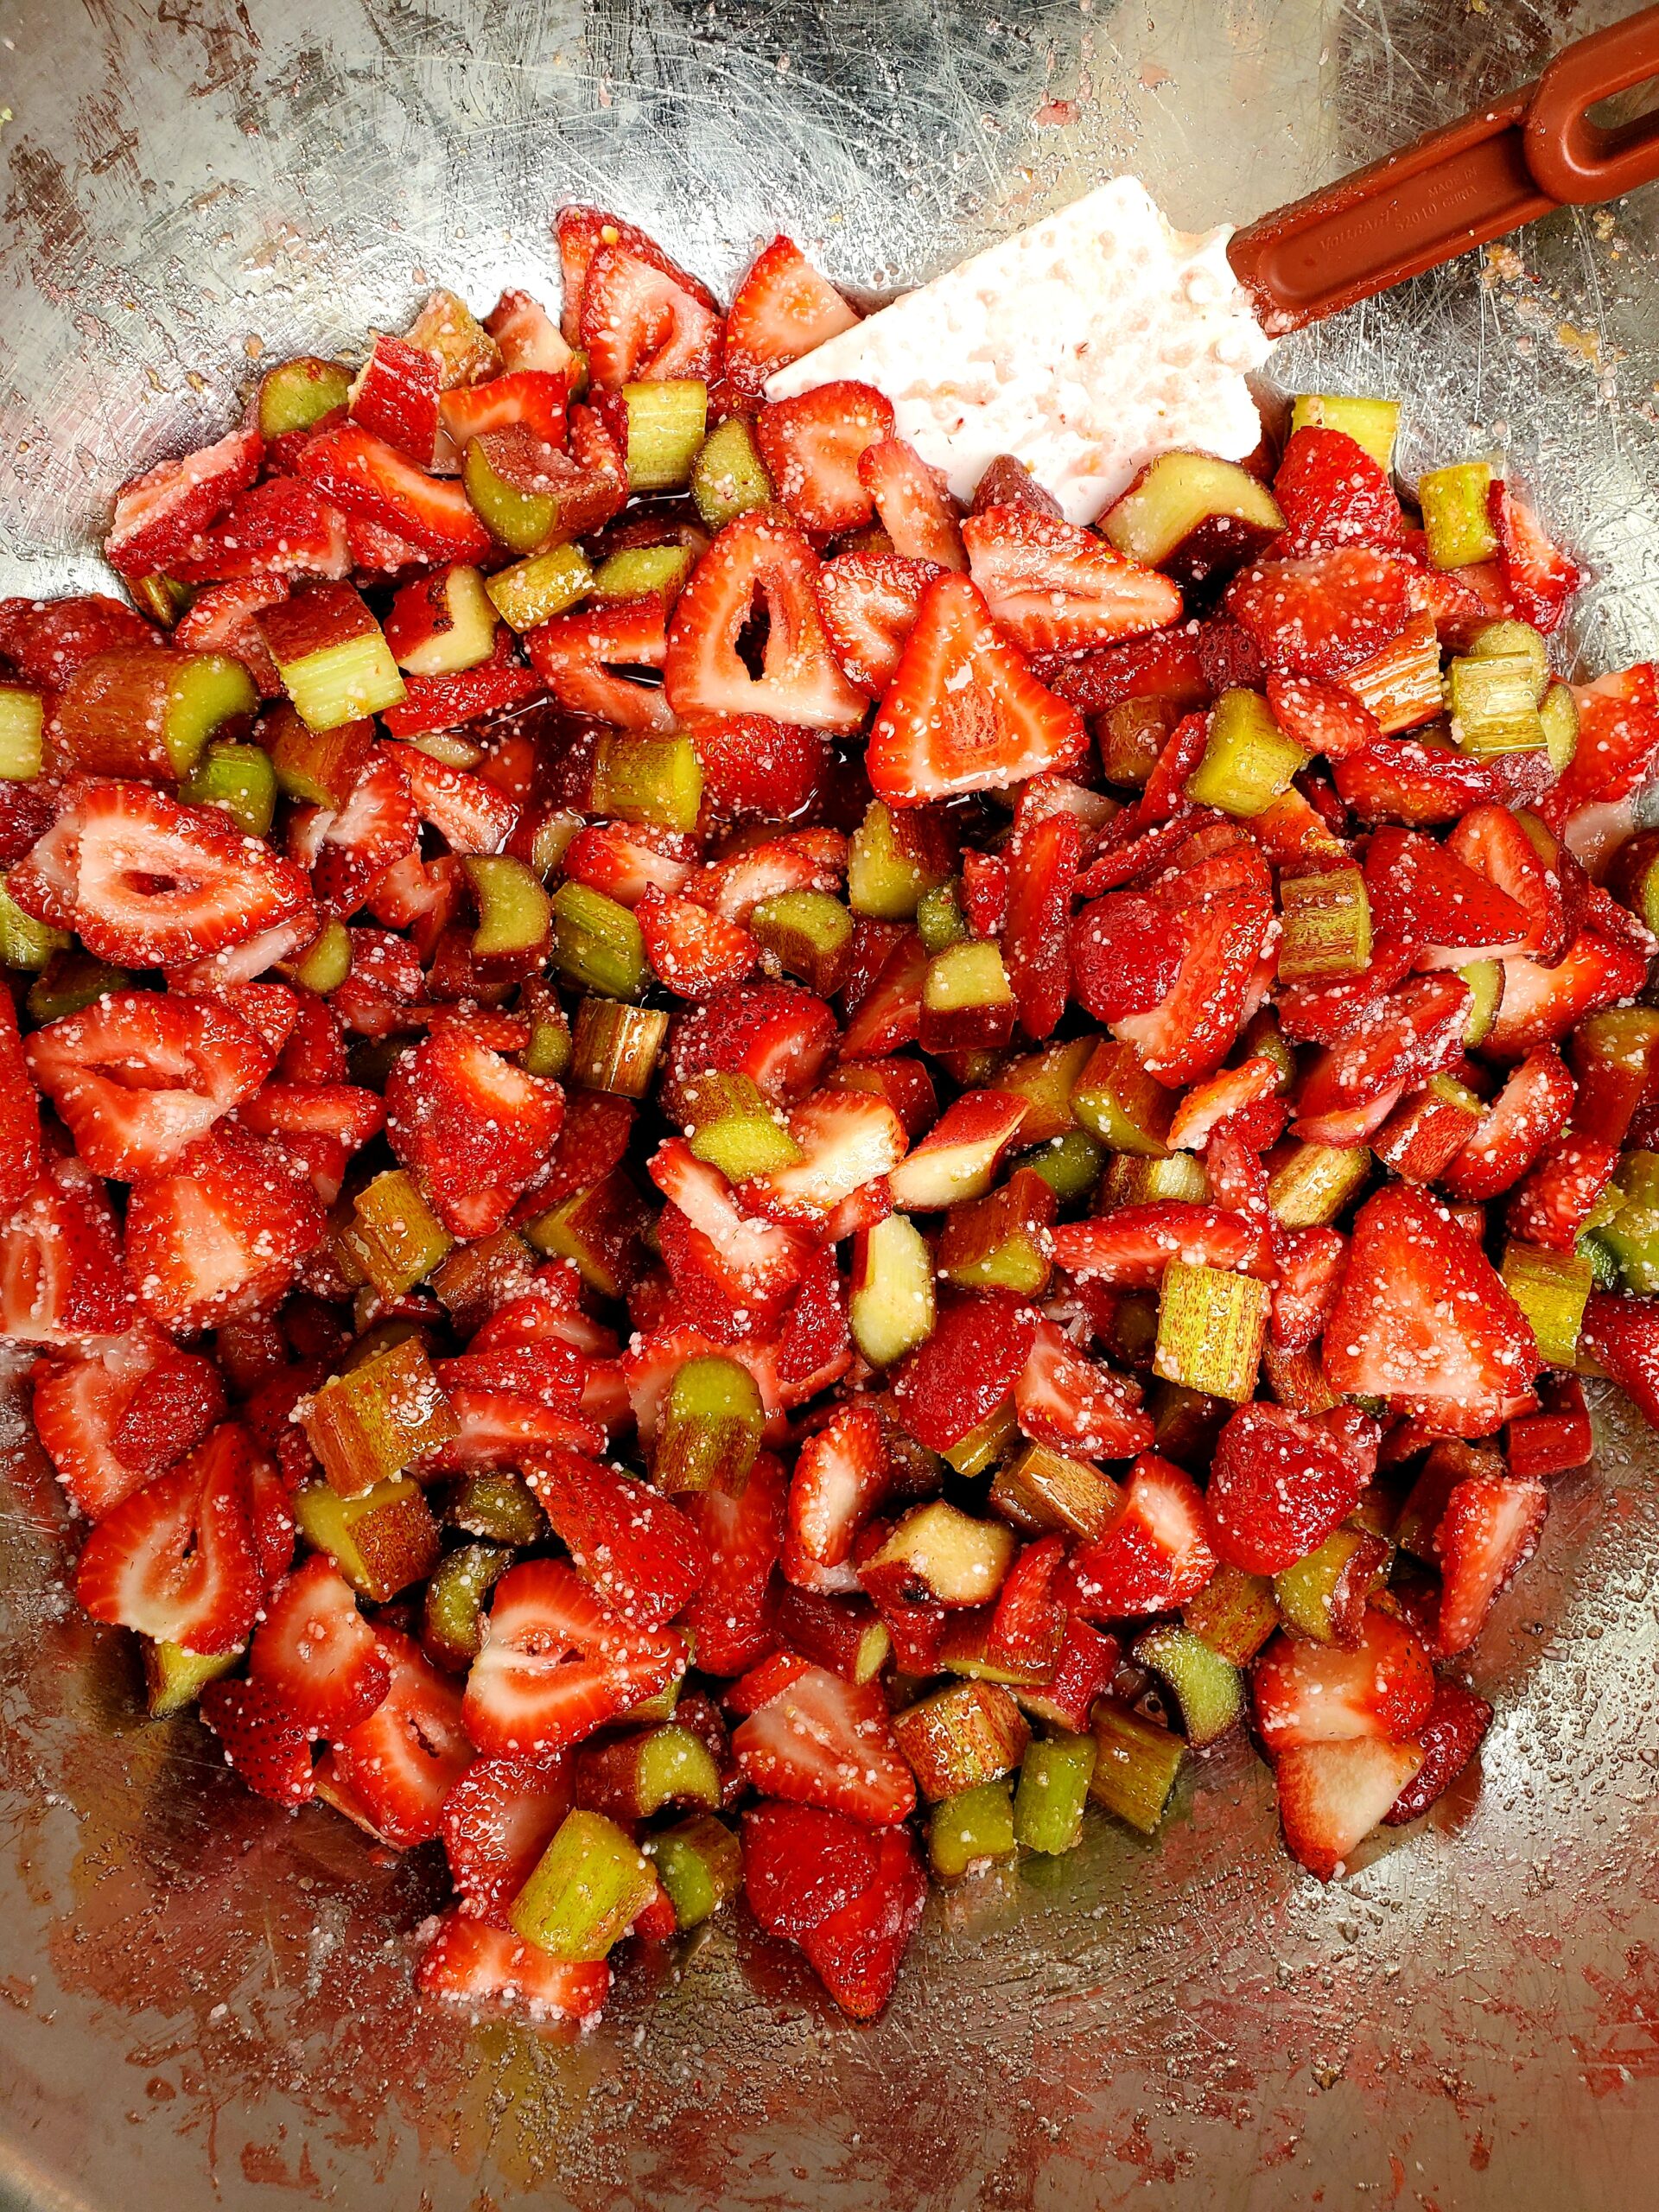 strawberry rhubarb pie being made